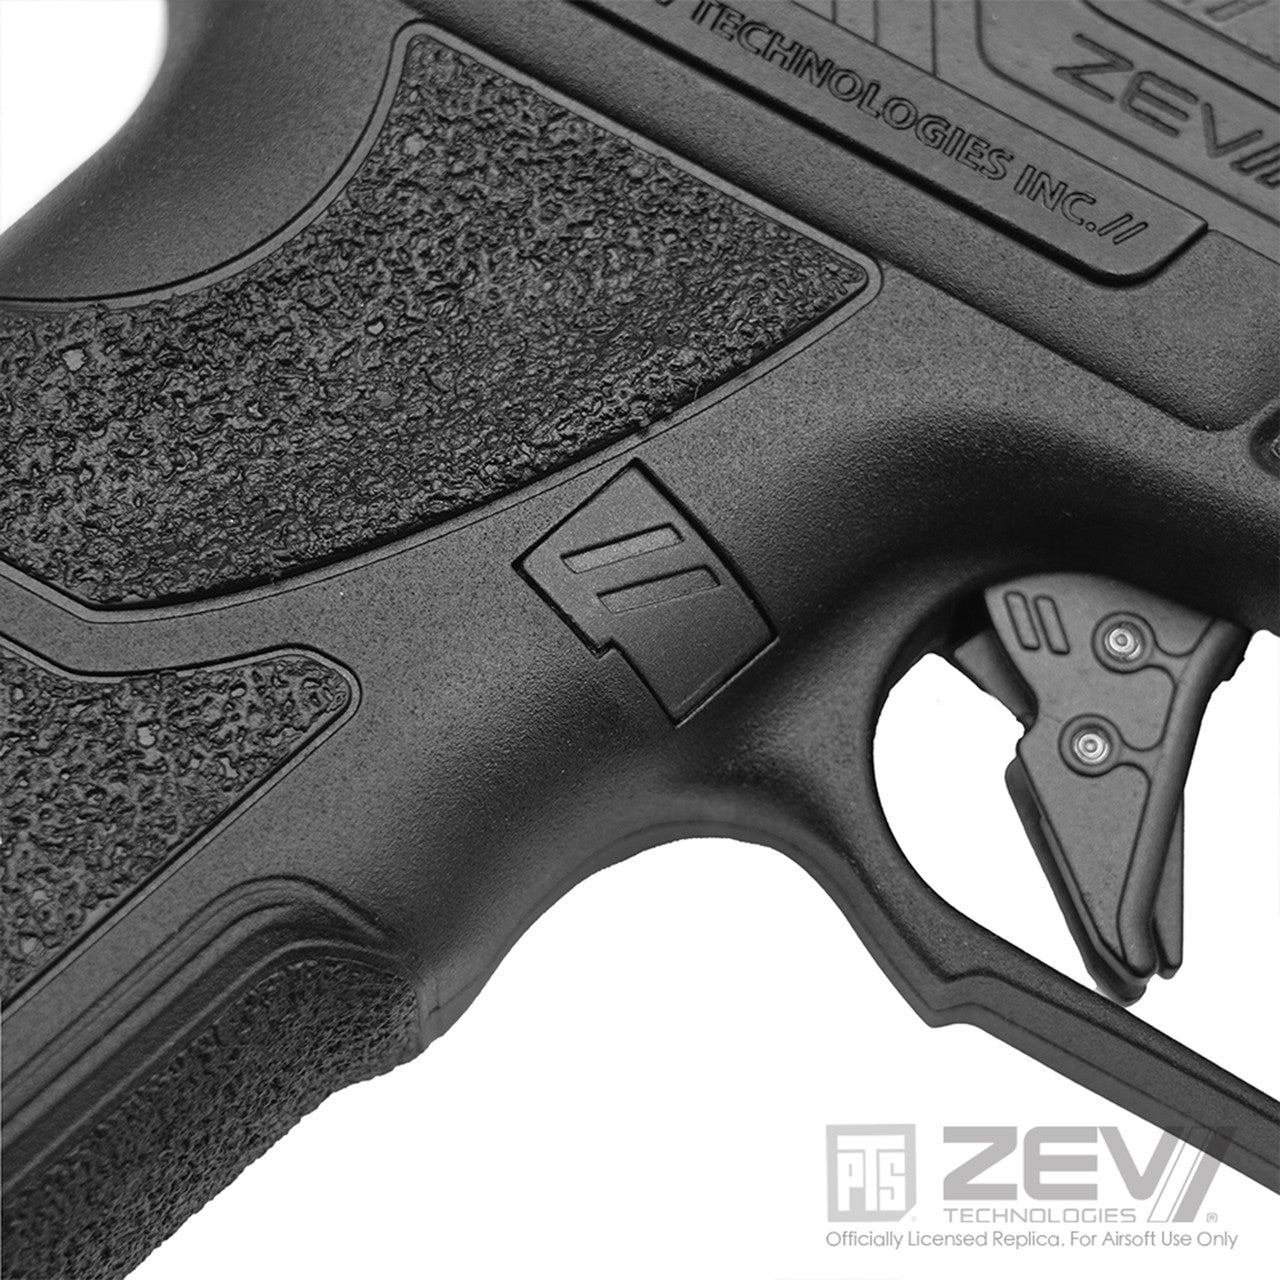 PTS ZEV OZ9 Elite (Standard version) Gas Blowback Pistol